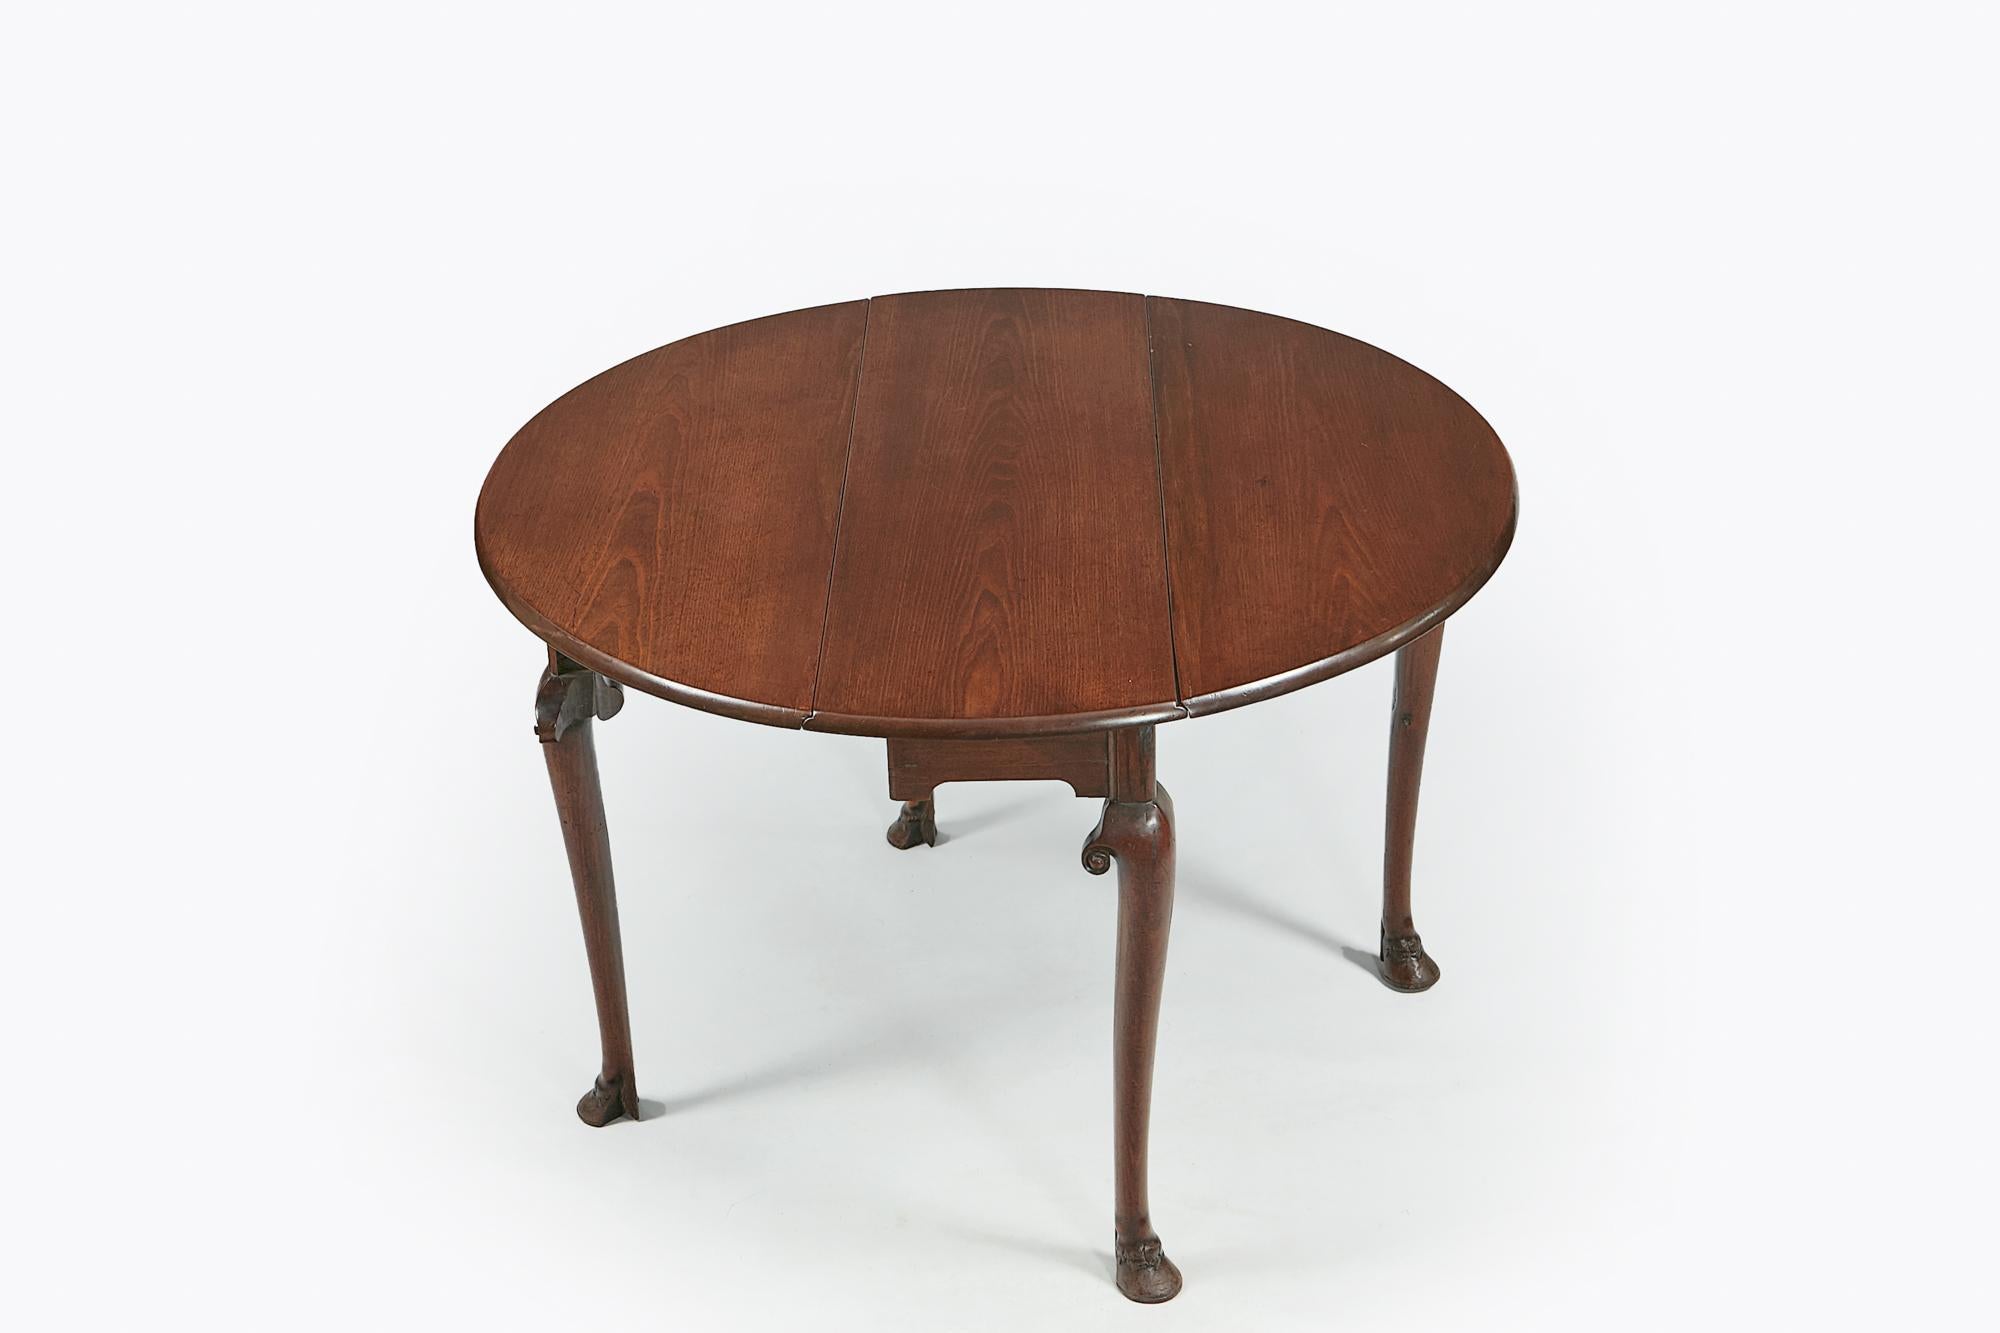 18th century drop leaf table